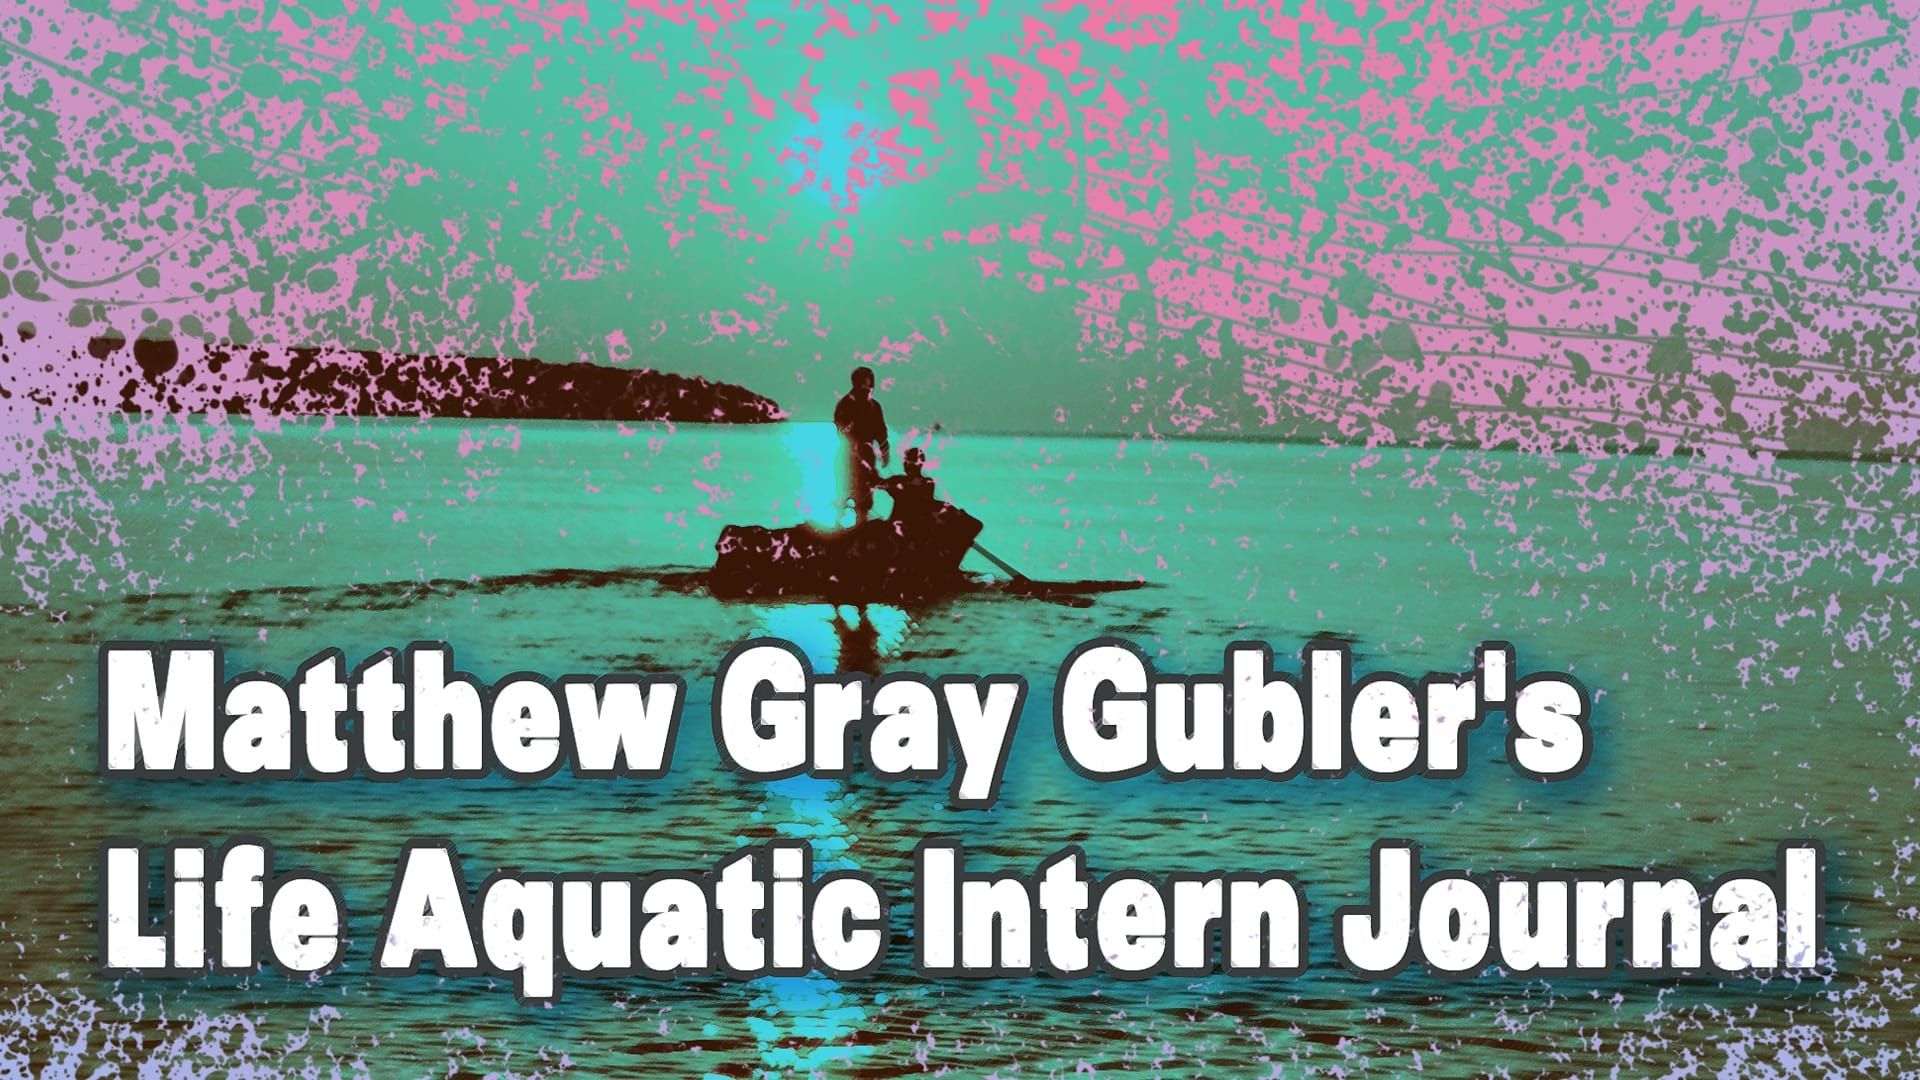 Matthew Gray Gubler's Life Aquatic Intern Journal background